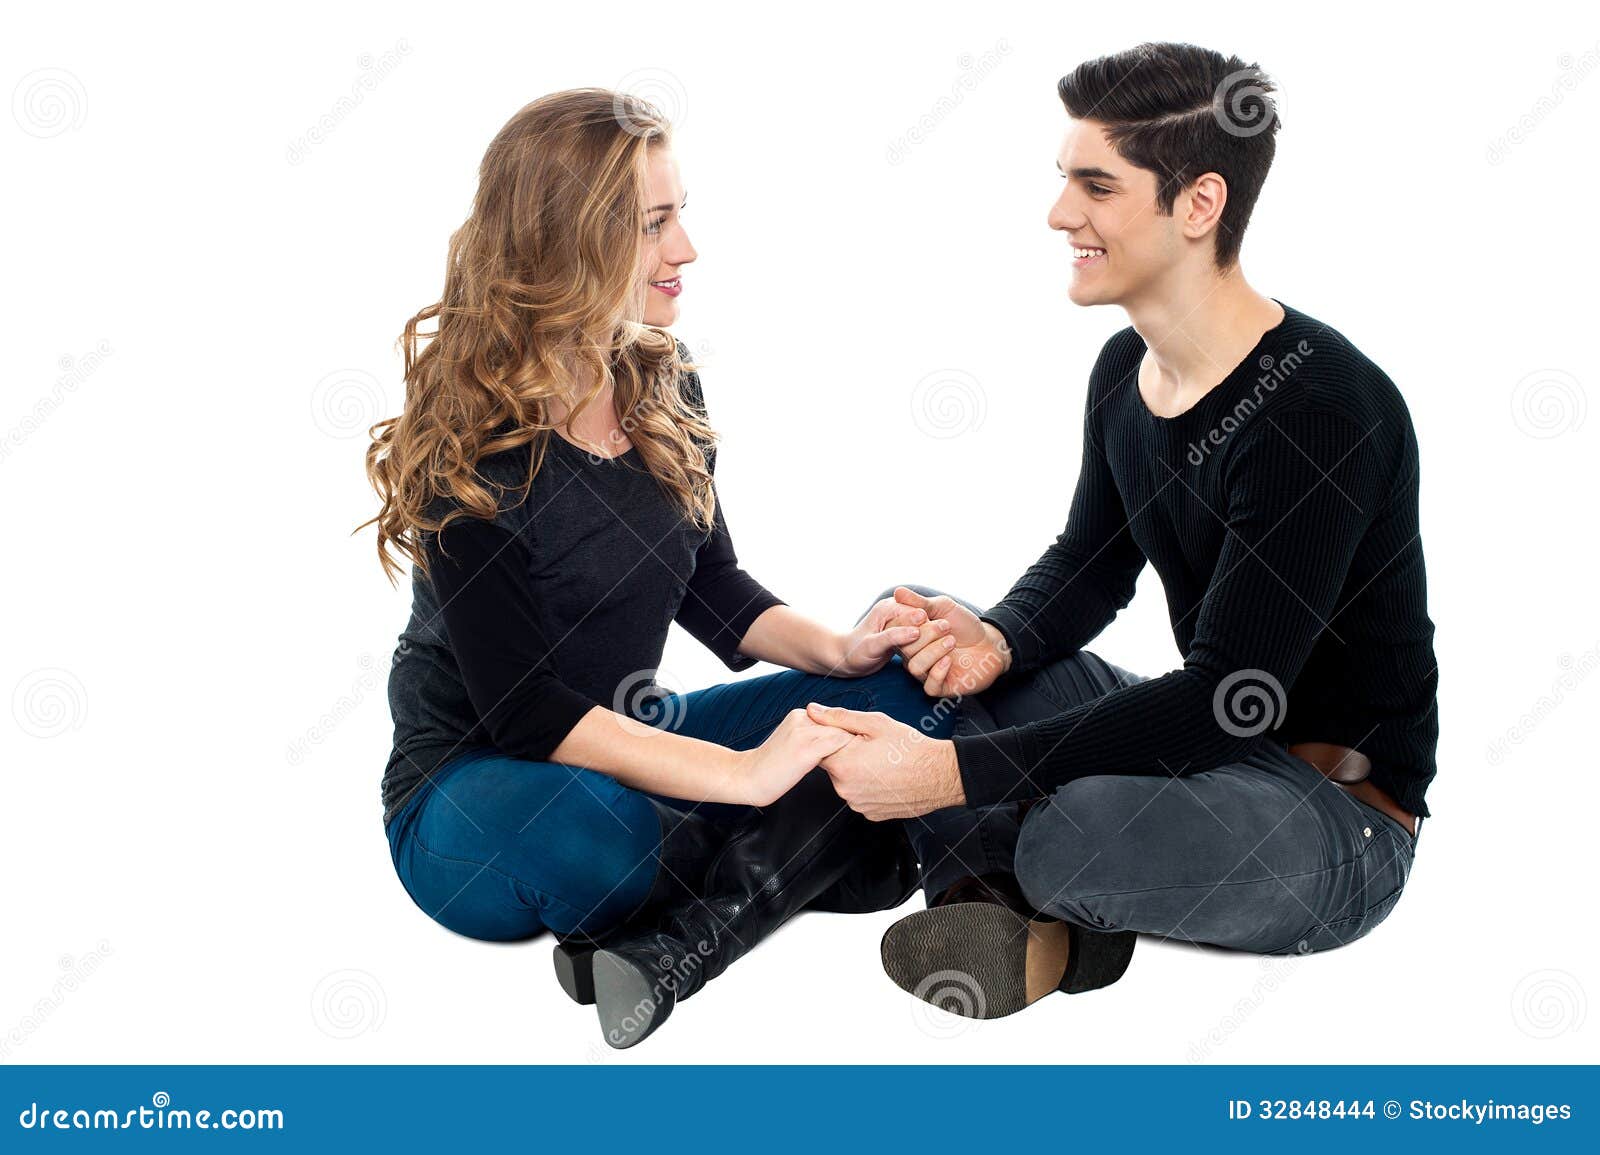 Идти друг напротив друга. Сидят друг напротив друга. Два человека сидят друг напротив друга. Человек сидит на другом. Два человека сидят на полу.